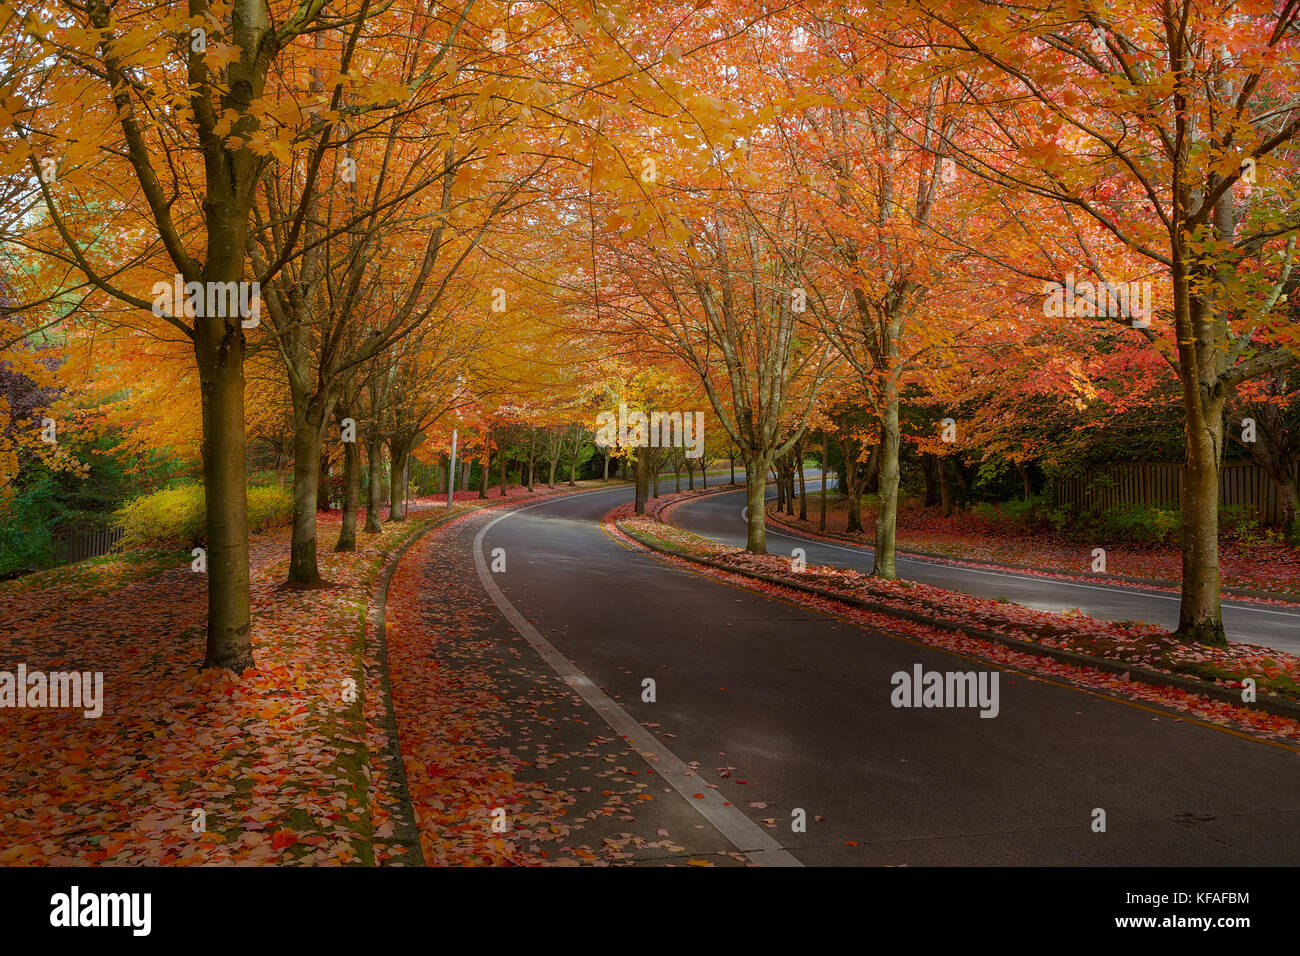 Maple Tree Lined Street in North American Suburban Neighborhood street in fall season Stock Photo